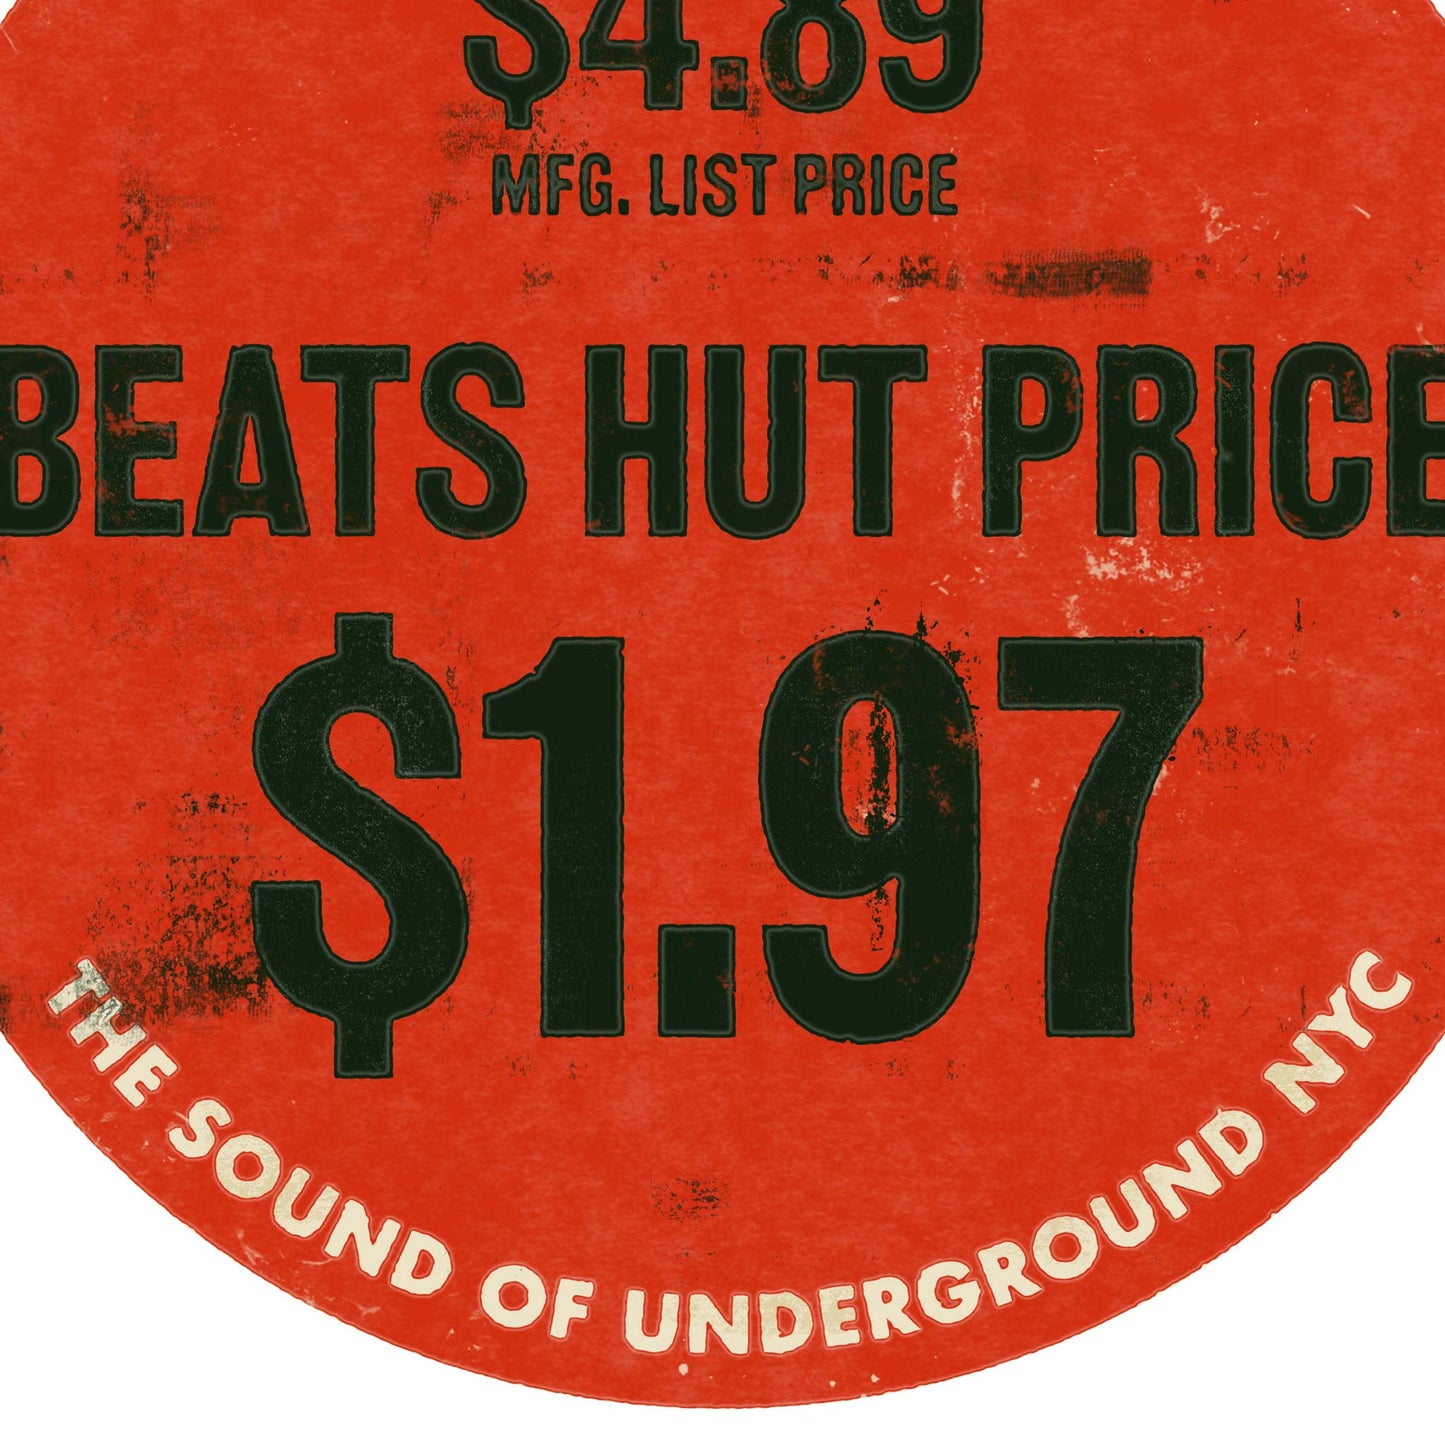 Album Cover Art: 'Beats Hut NYC' Record Store Price Tag Sticker Print